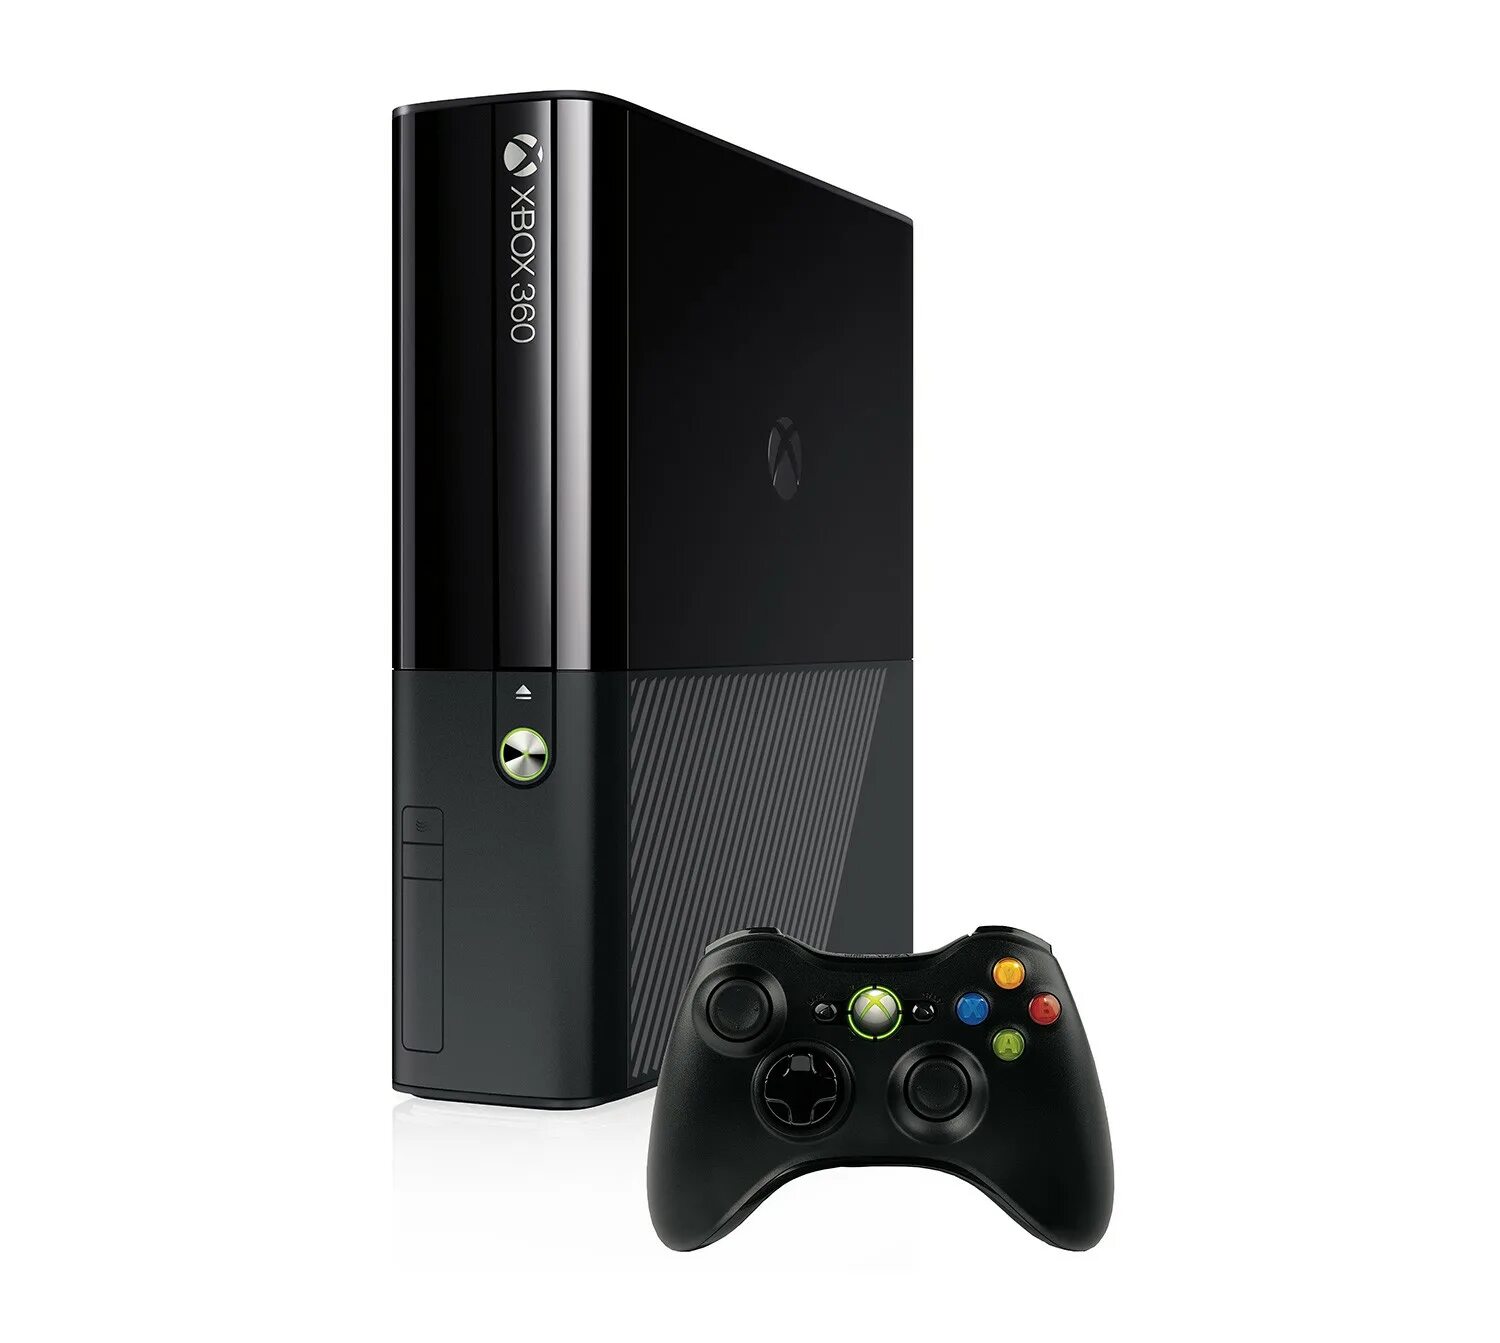 Xbox 360 e. Xbox 360 е 500gb. Игровая приставка Microsoft Xbox 360 e 250 ГБ. Хбокс 360 слим. Приставка хбокс 360